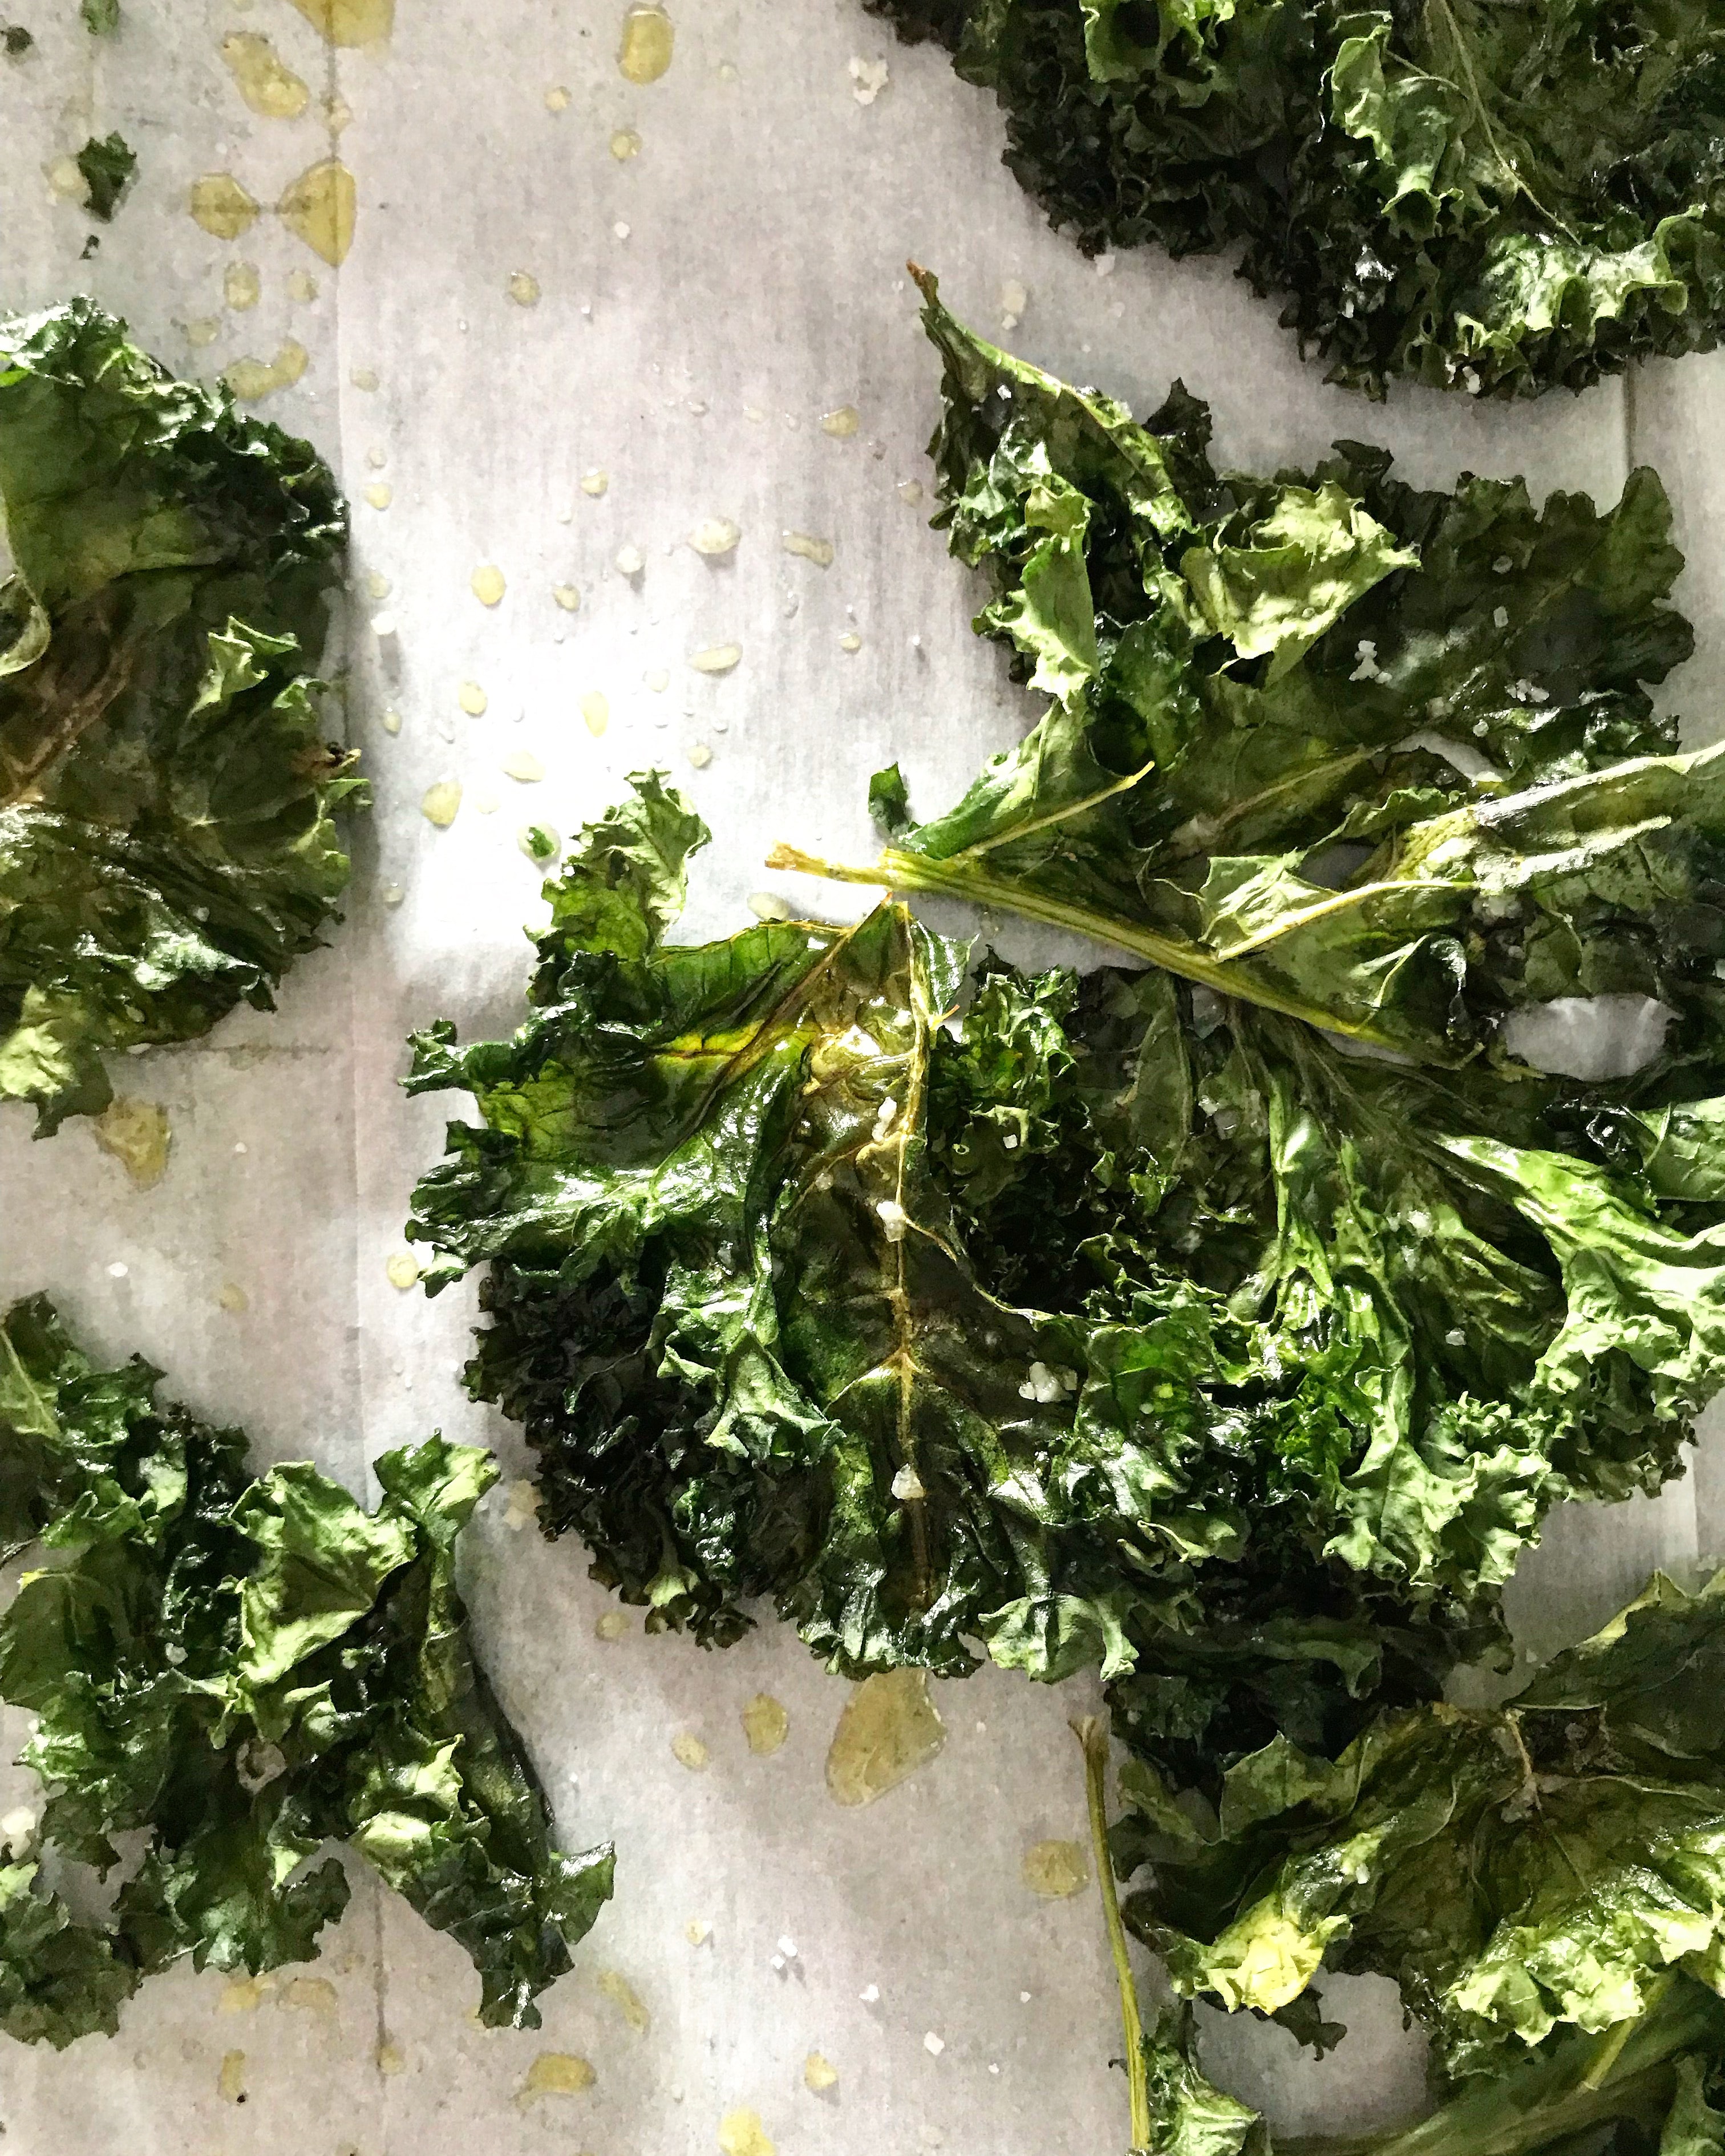 Recette NutriSimple Kale chips